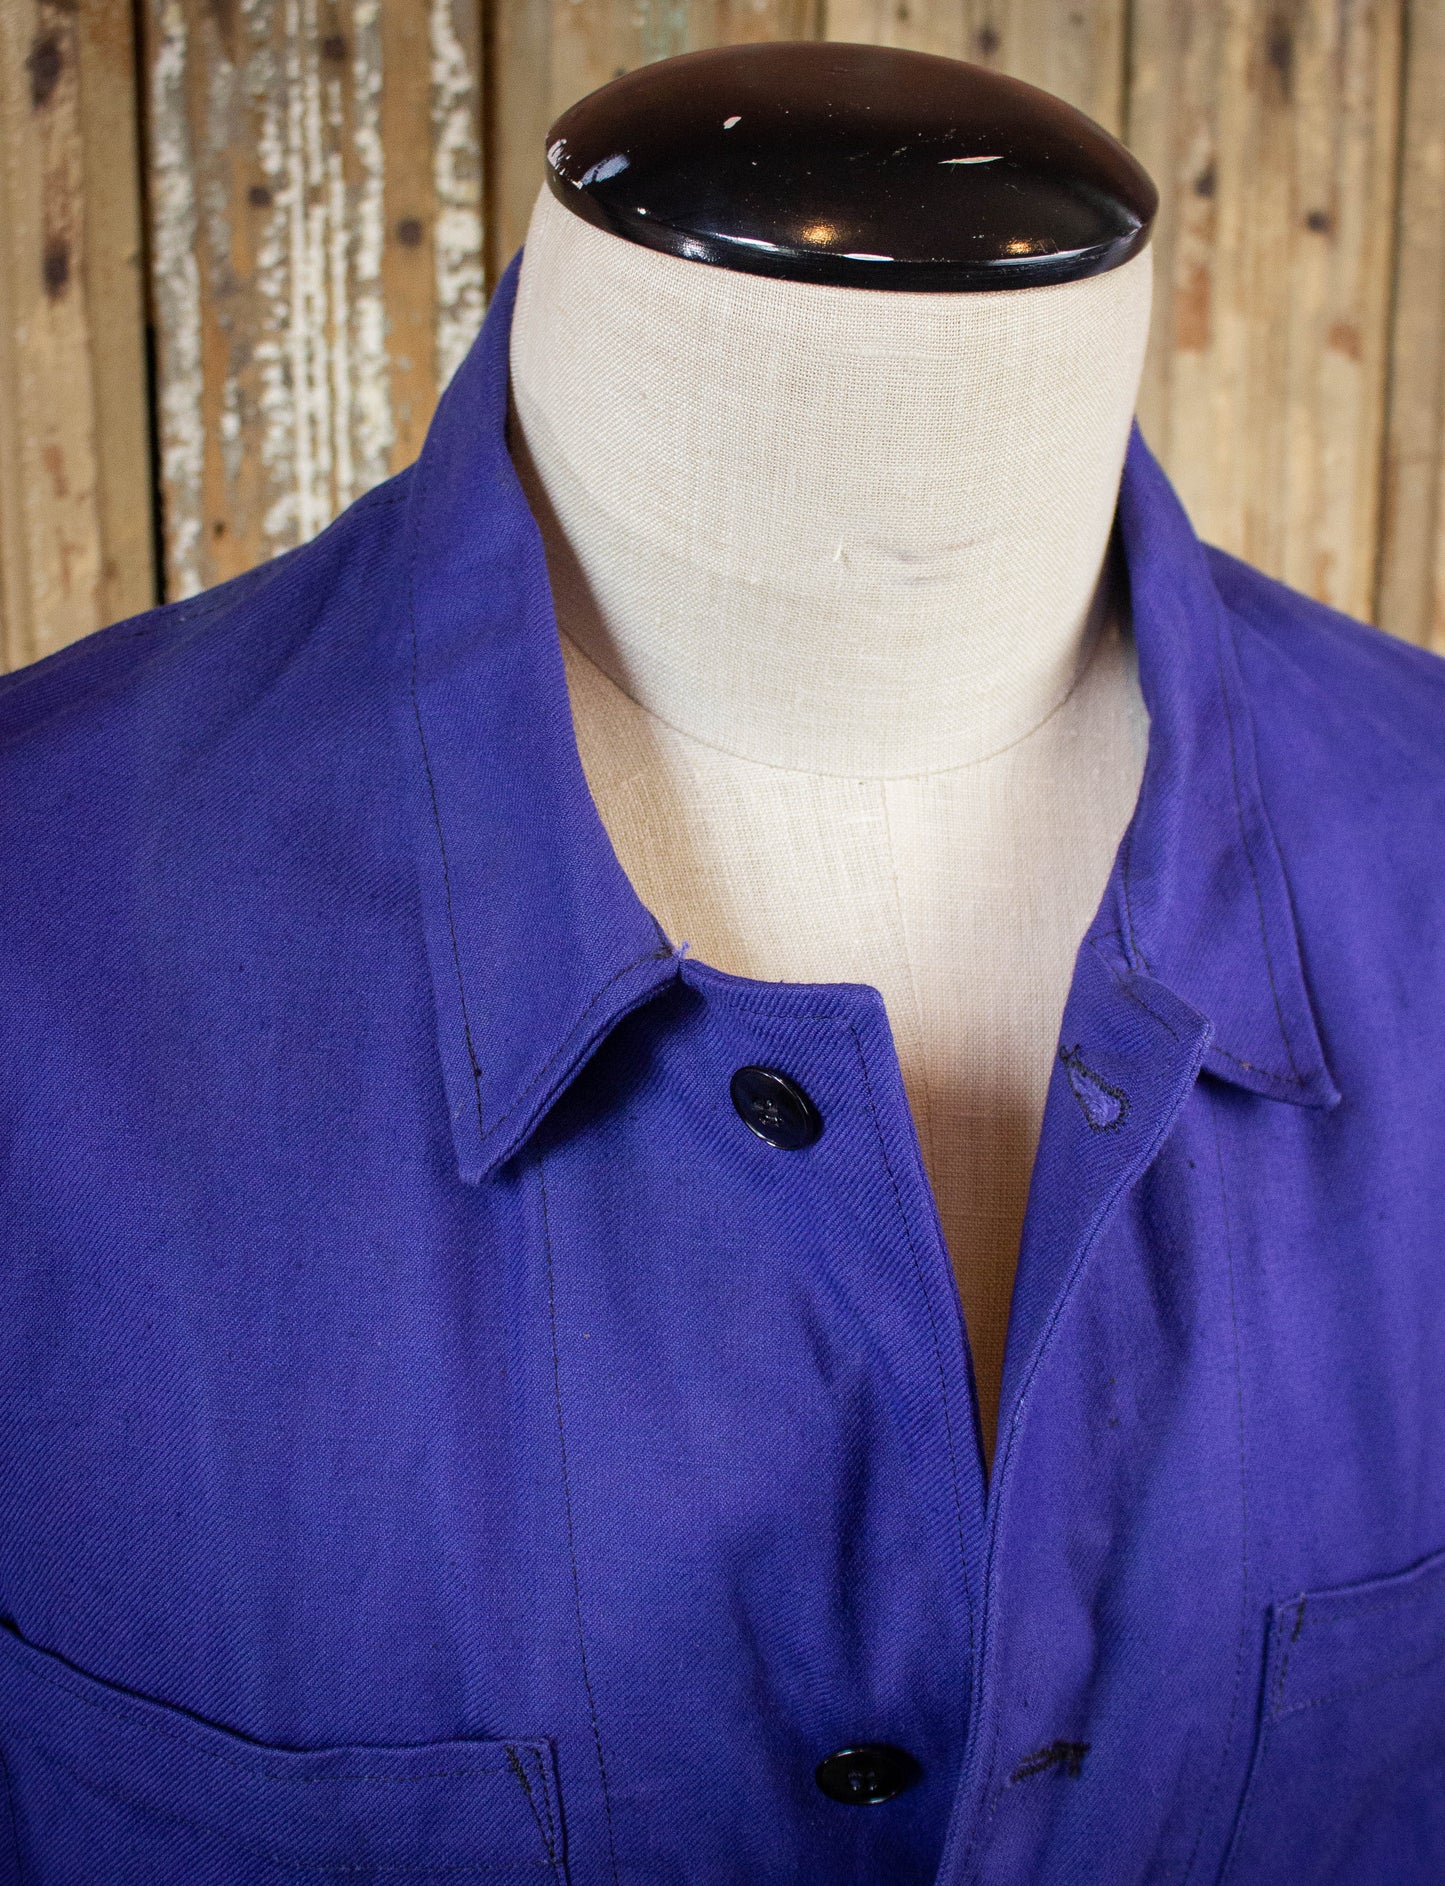 Vintage French Workwear Denim Chore Jacket Purple XL